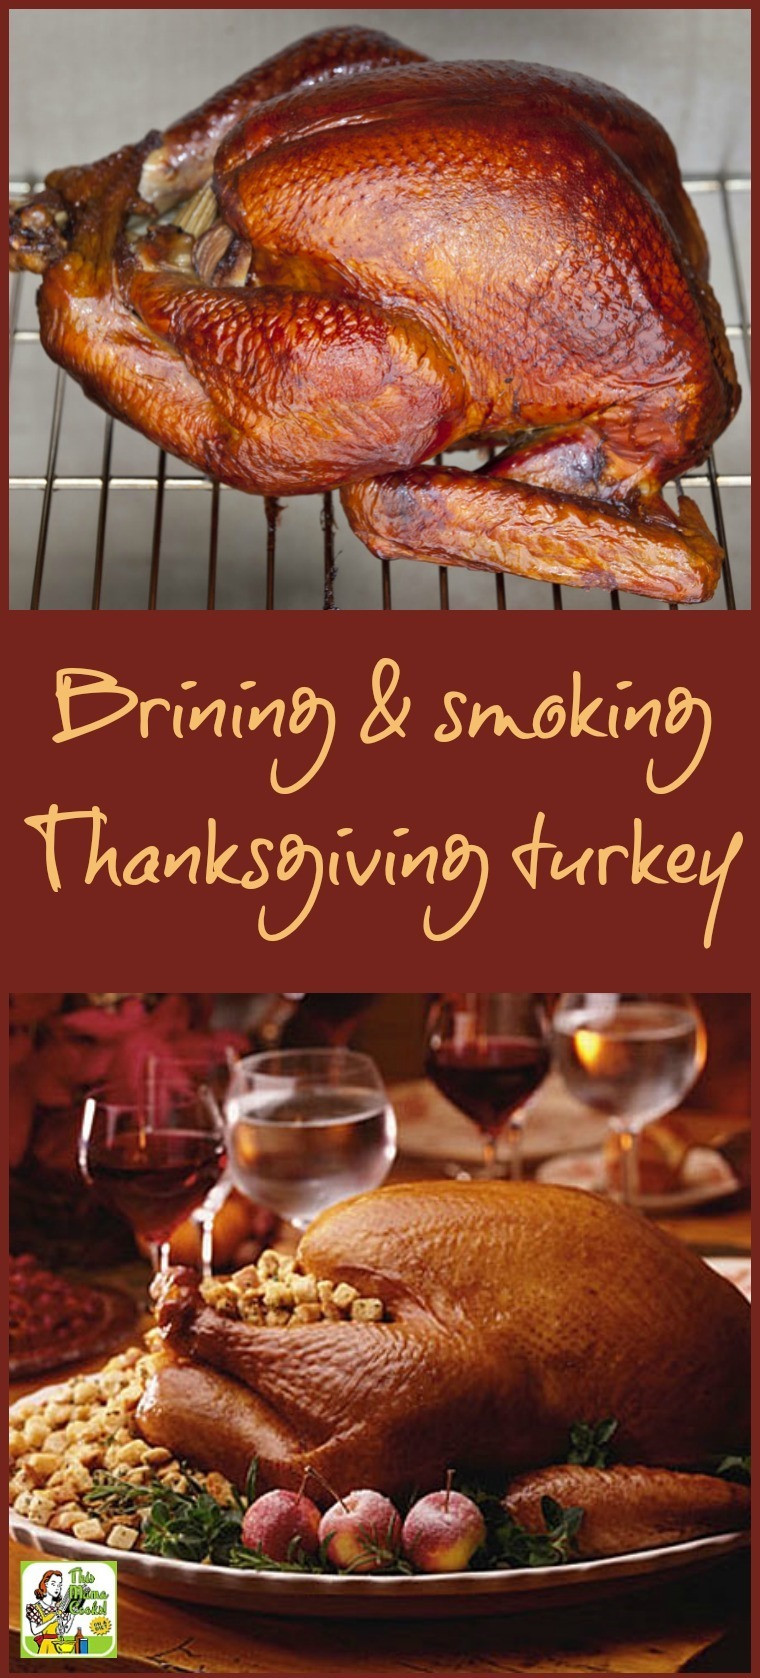 Brining Turkey Recipes Thanksgiving
 Brining and smoking your Thanksgiving turkey